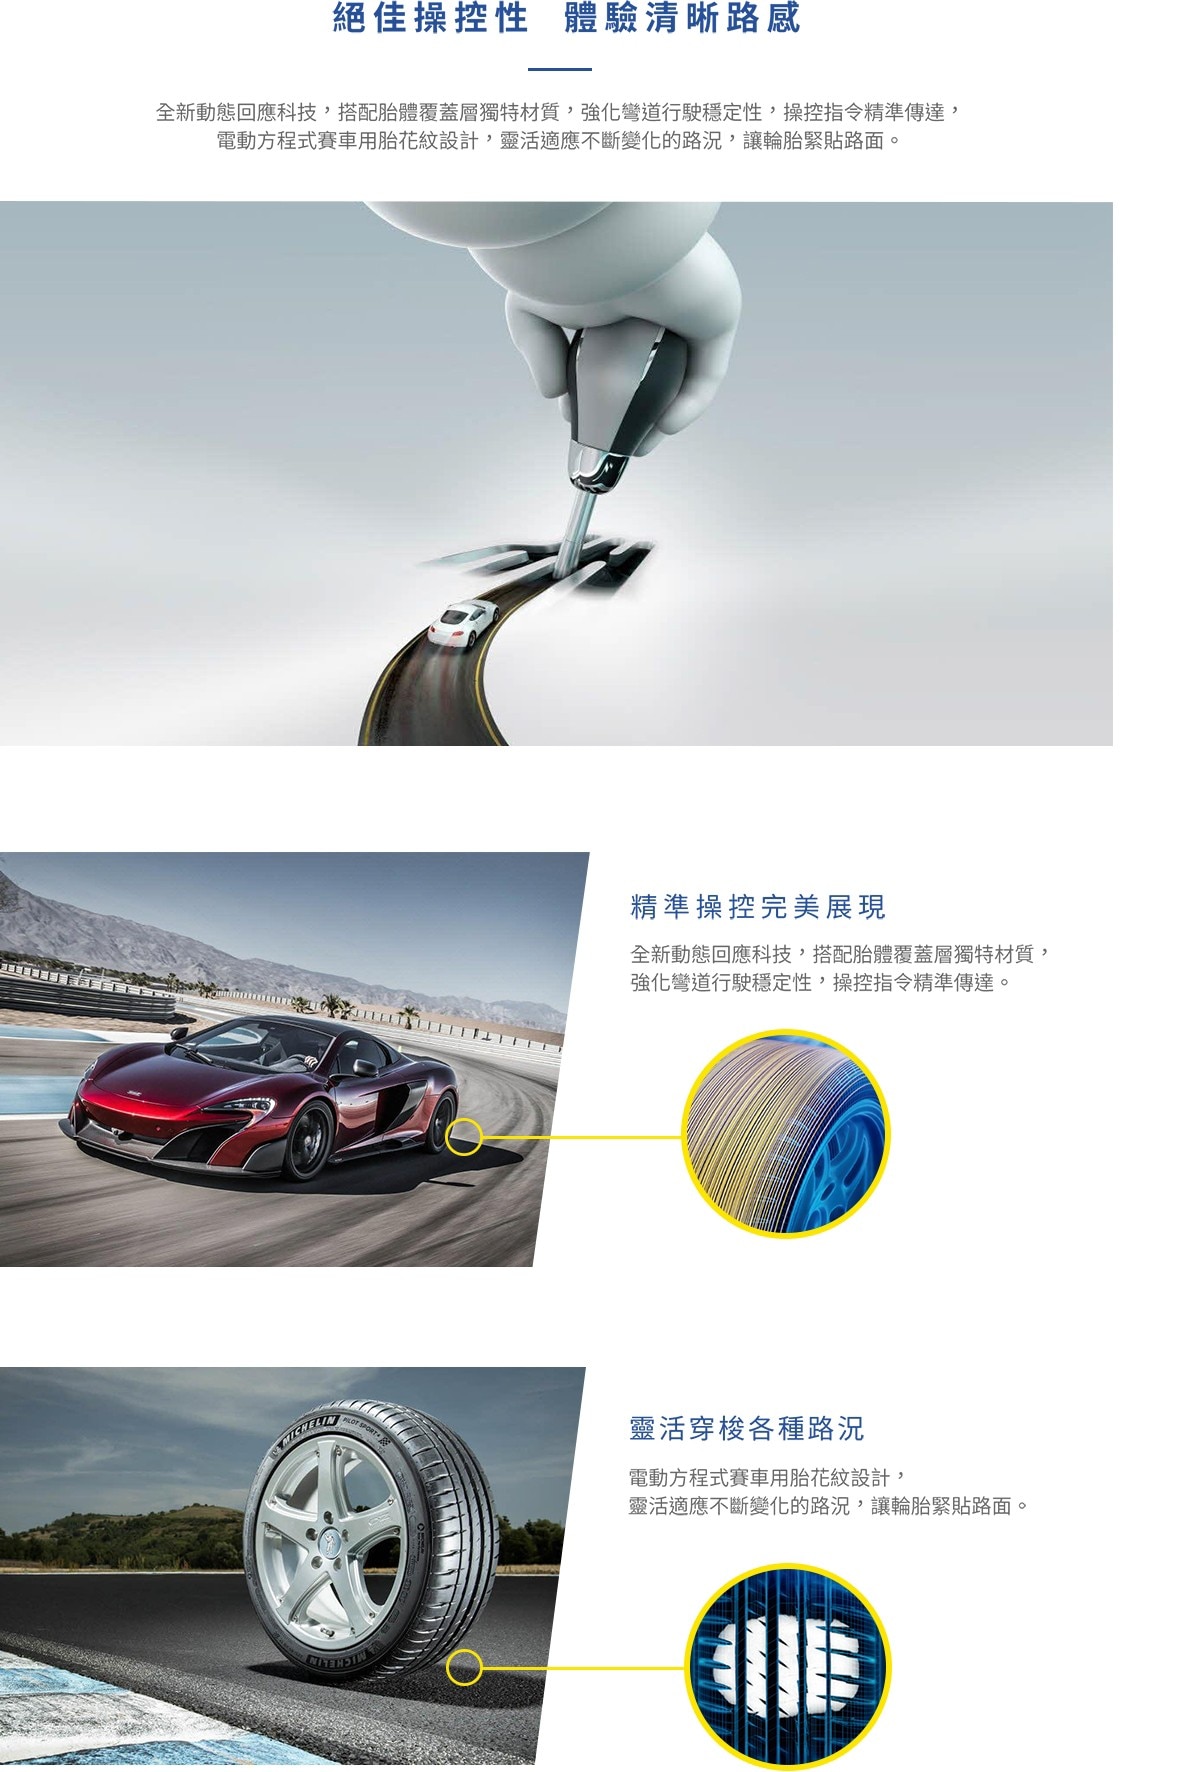 Michelin PILOTSPORT4 具有全新動態回應科技與特殊材質覆蓋，使人精準操控，並用電動方程式用賽車花紋，靈活穿梭各種路況。